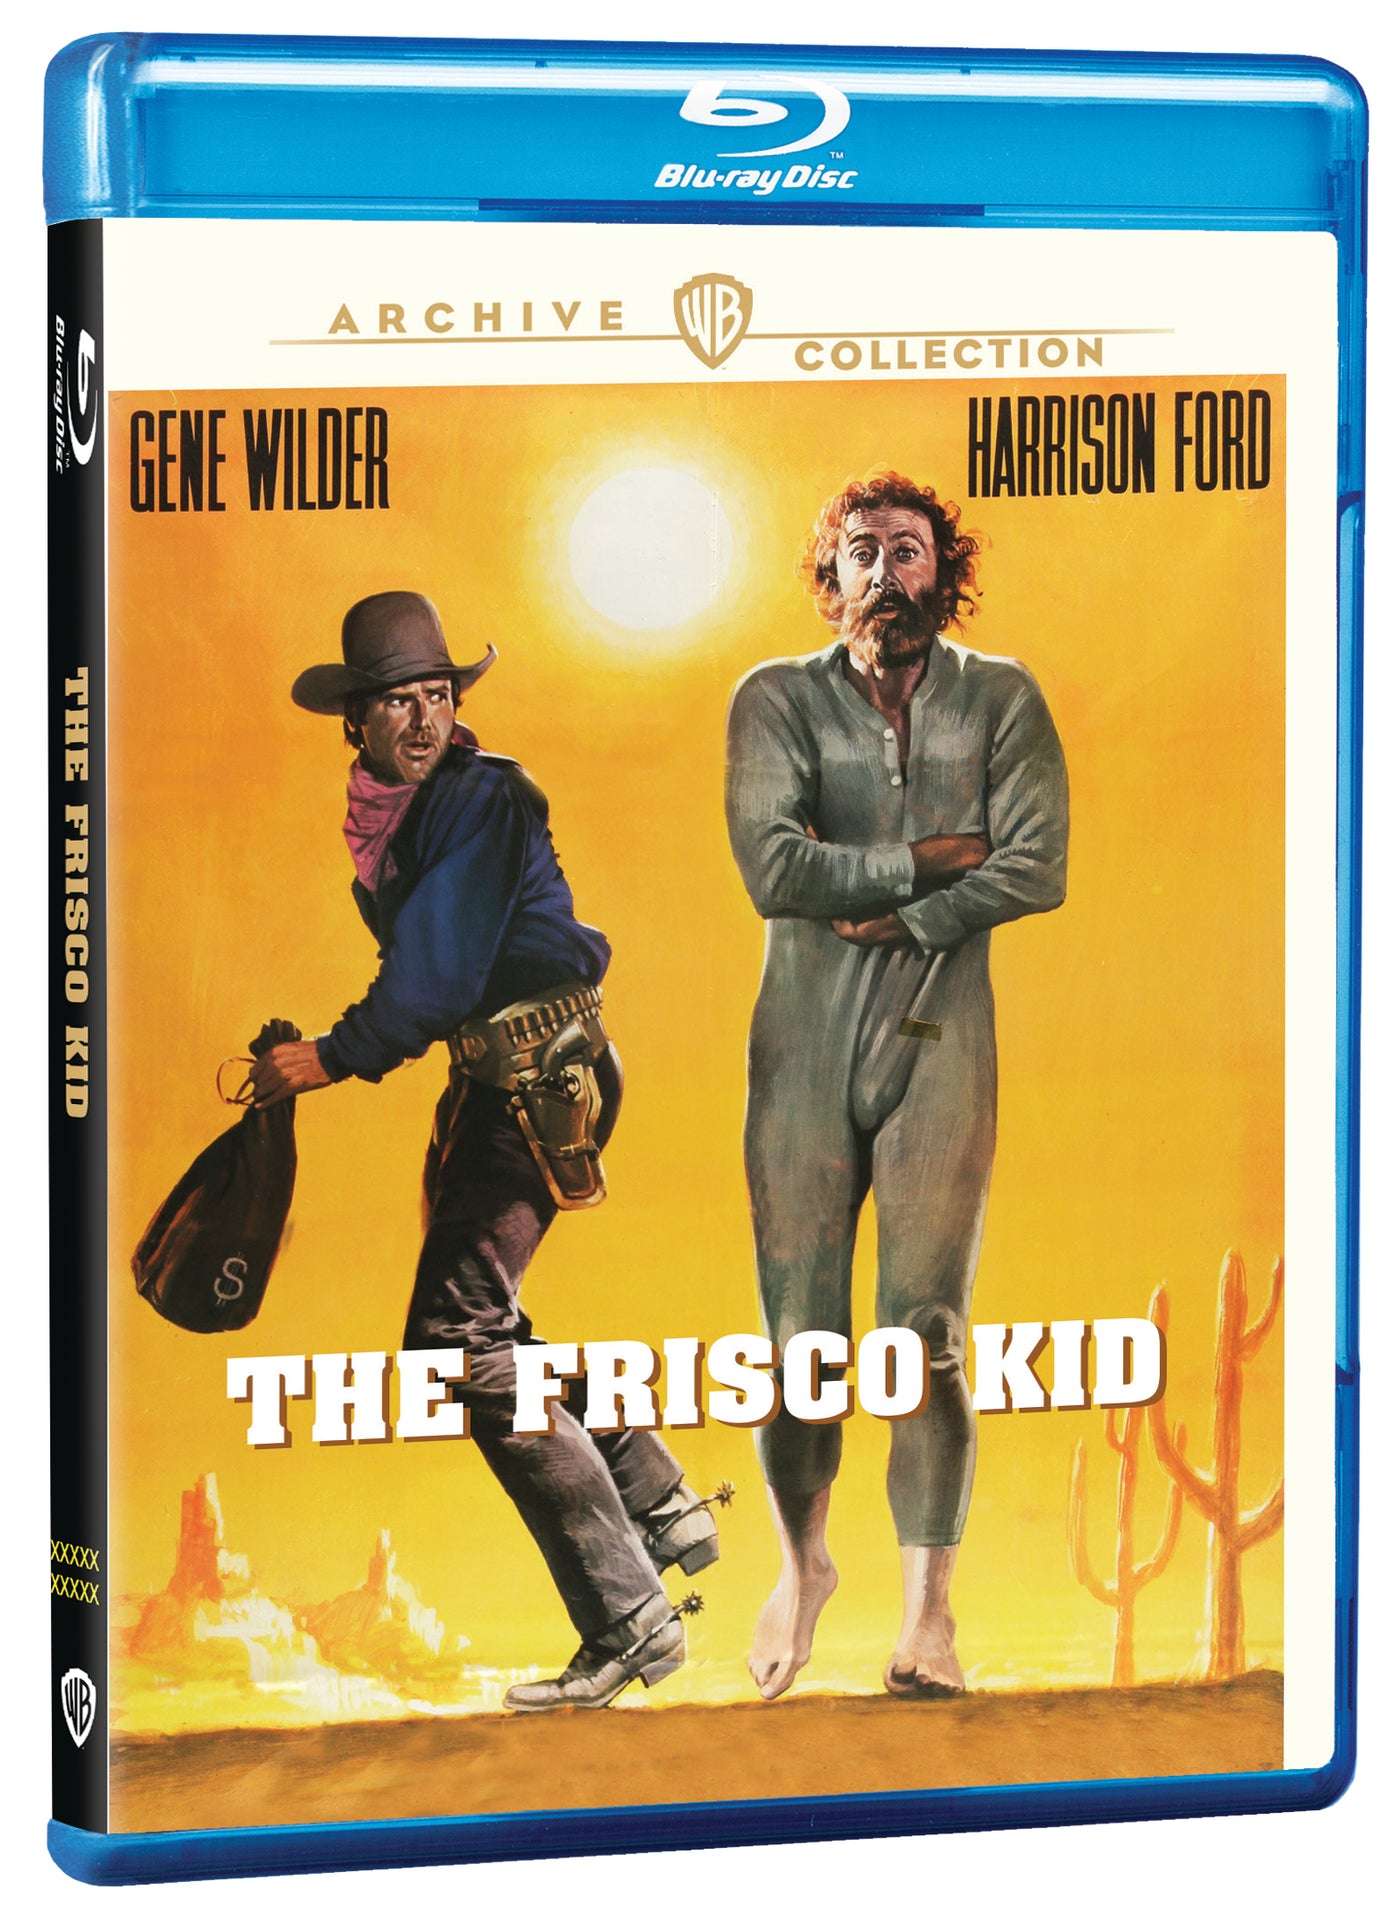 The Frisco Kid [Blu-Ray] [1979]